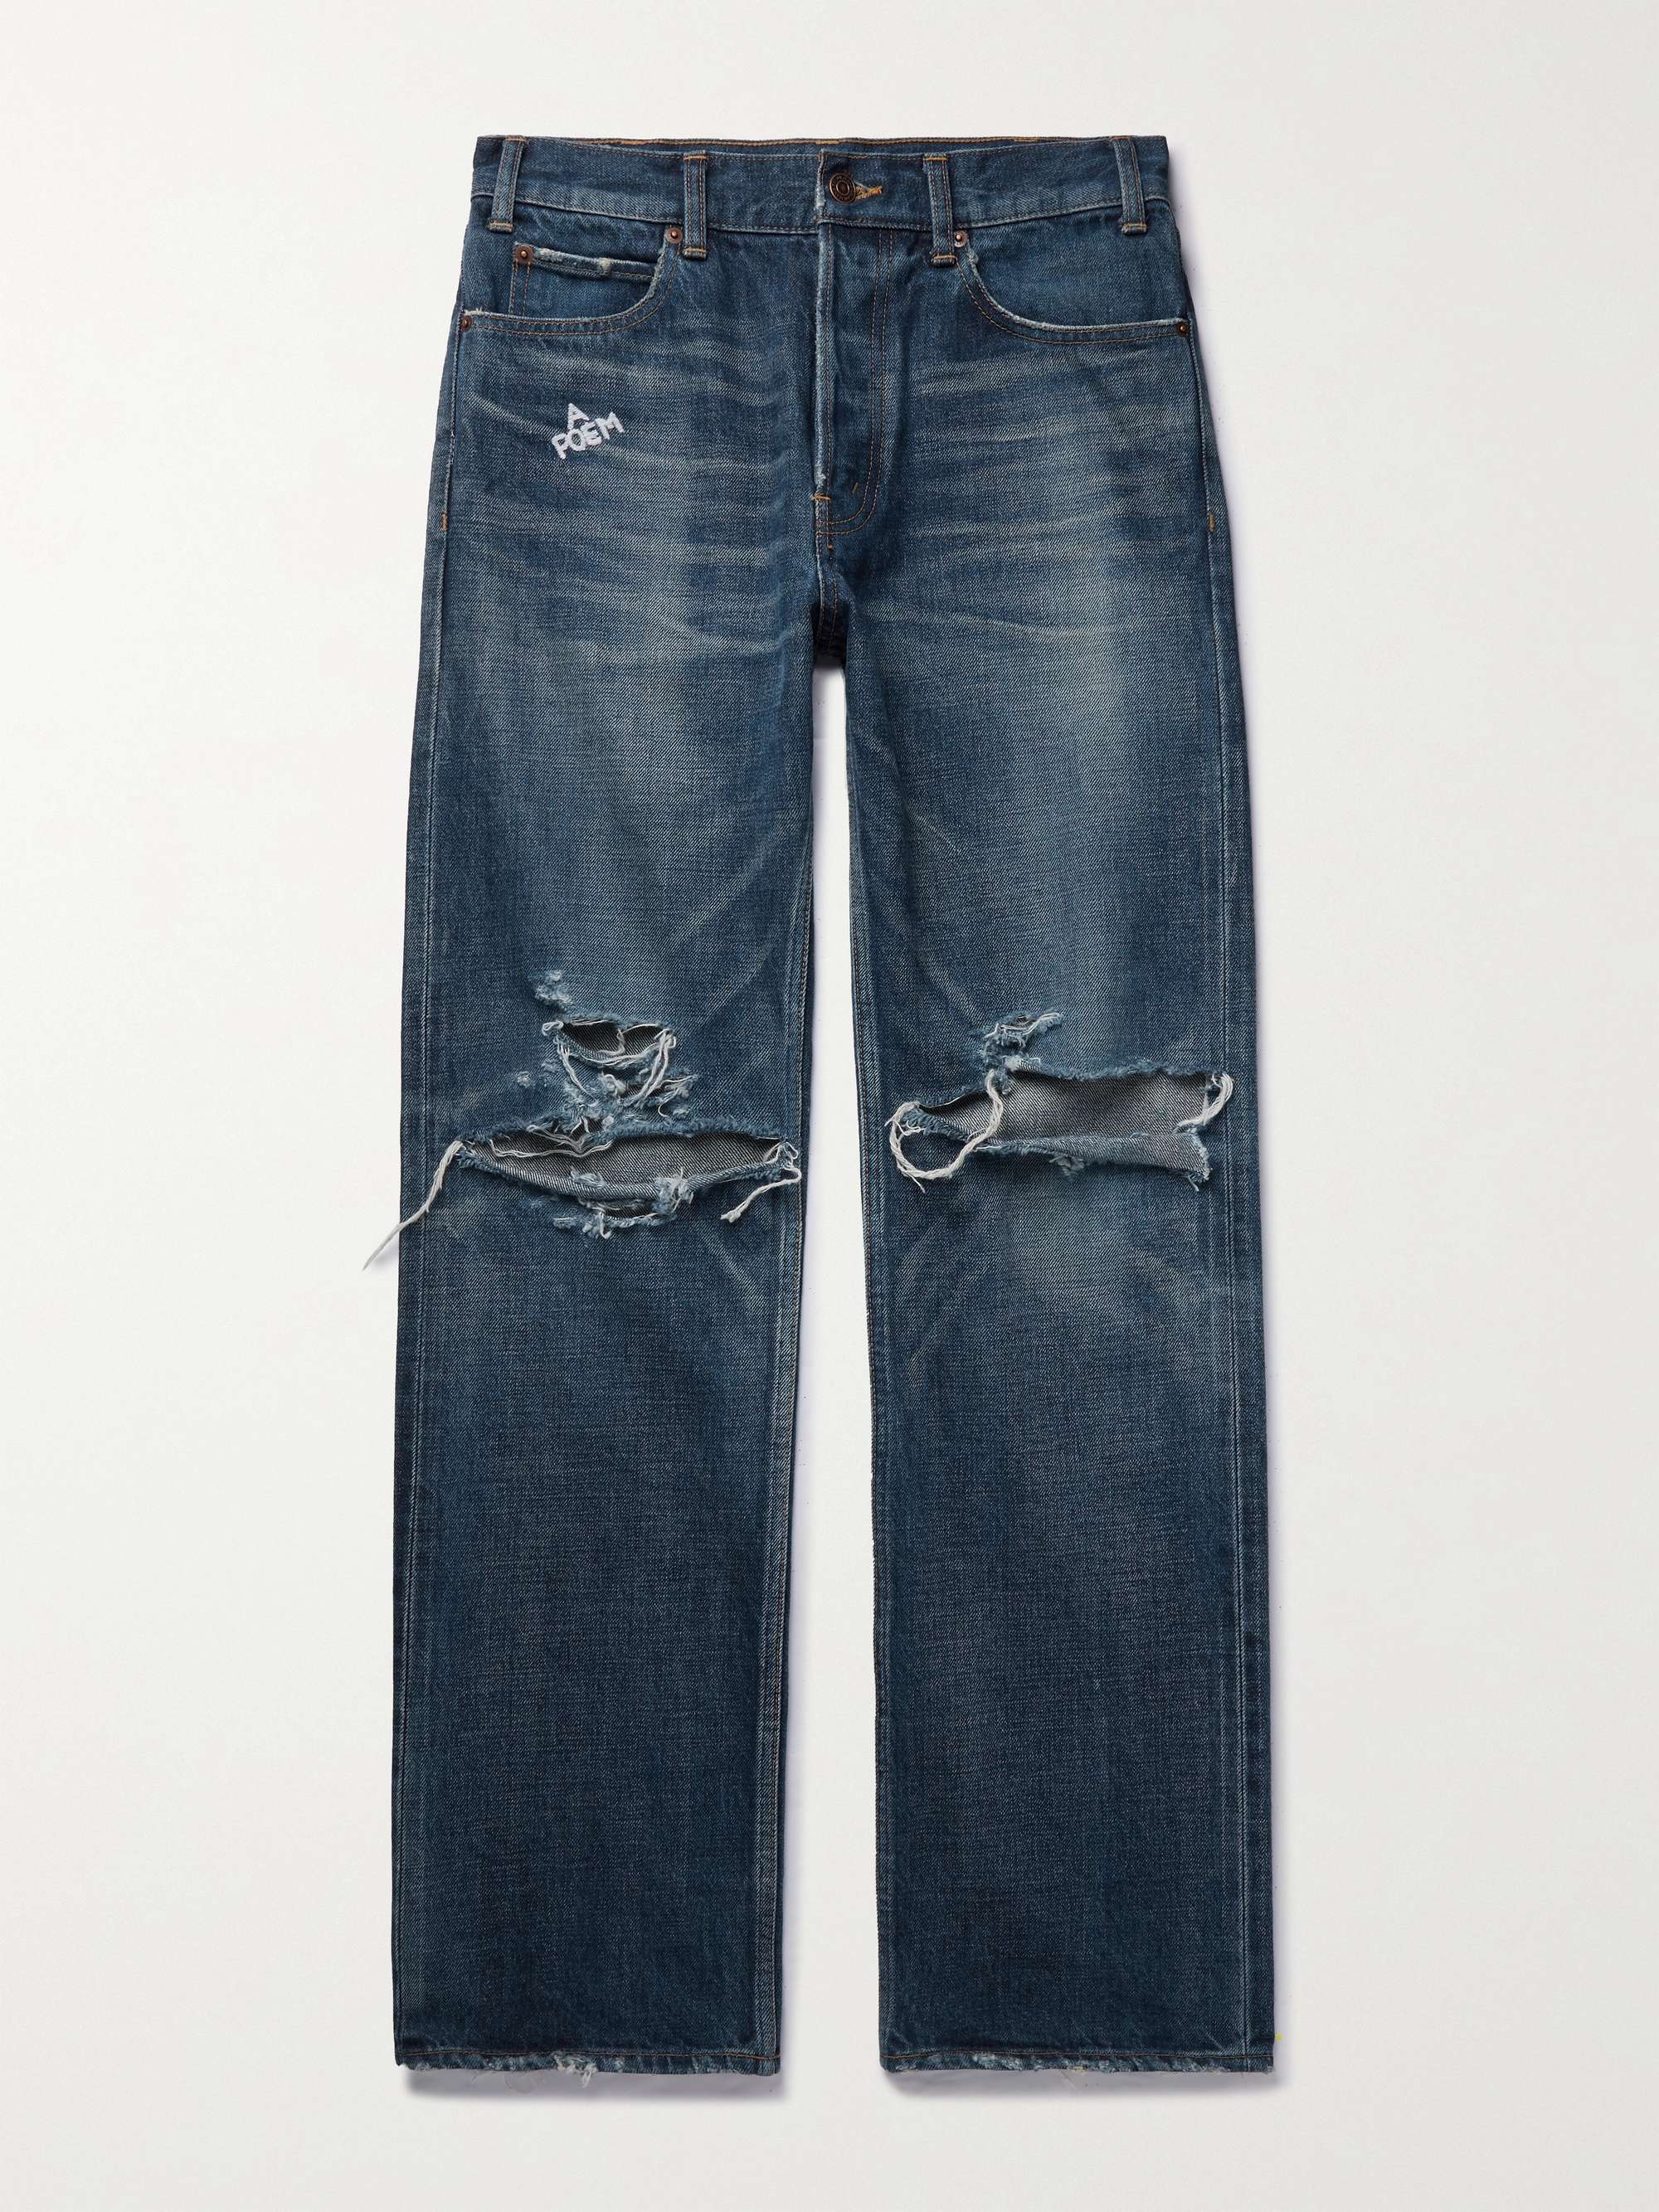 CELINE HOMME Kurt Distressed Selvedge Jeans for Men | MR PORTER